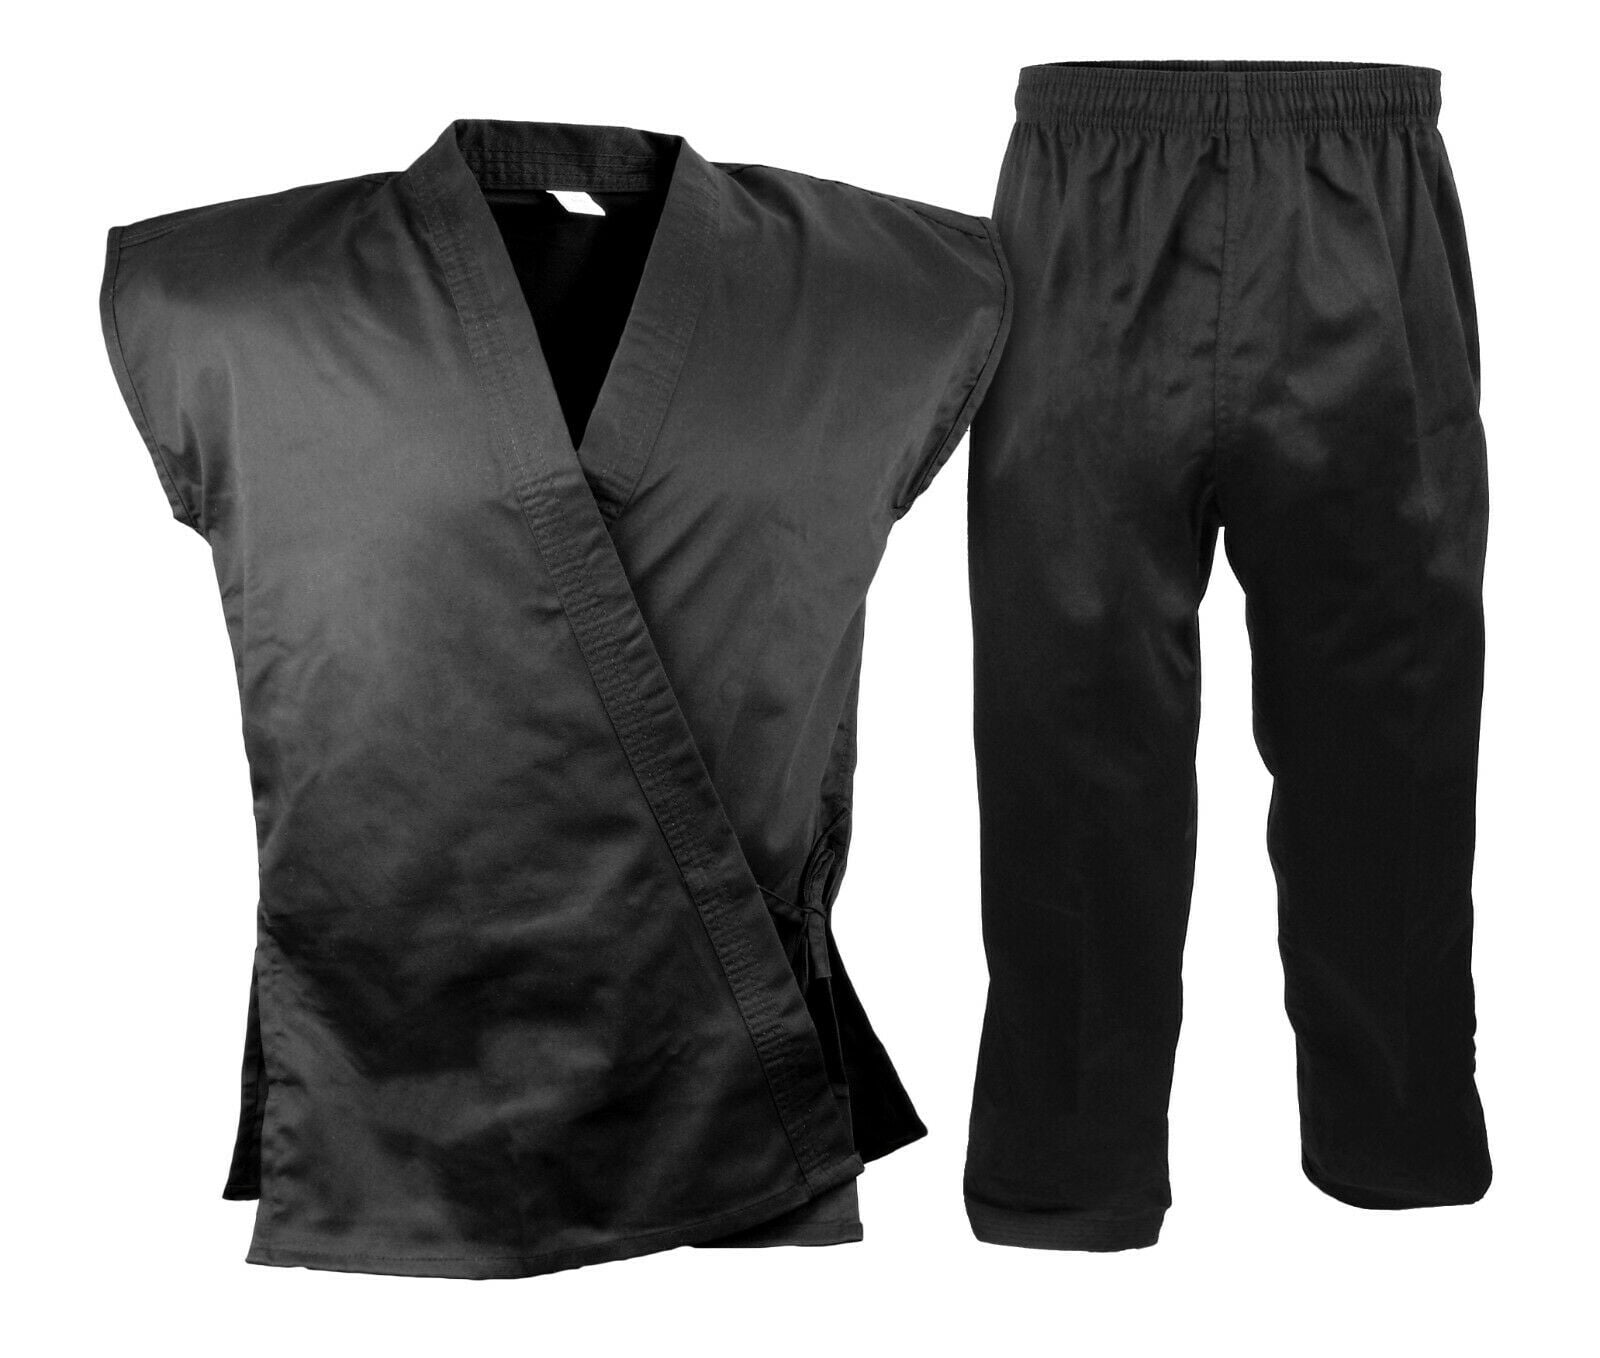 Taekwondo Martial Arts Uniform Sleeveless Gi Top for Karate Black/White/Red 